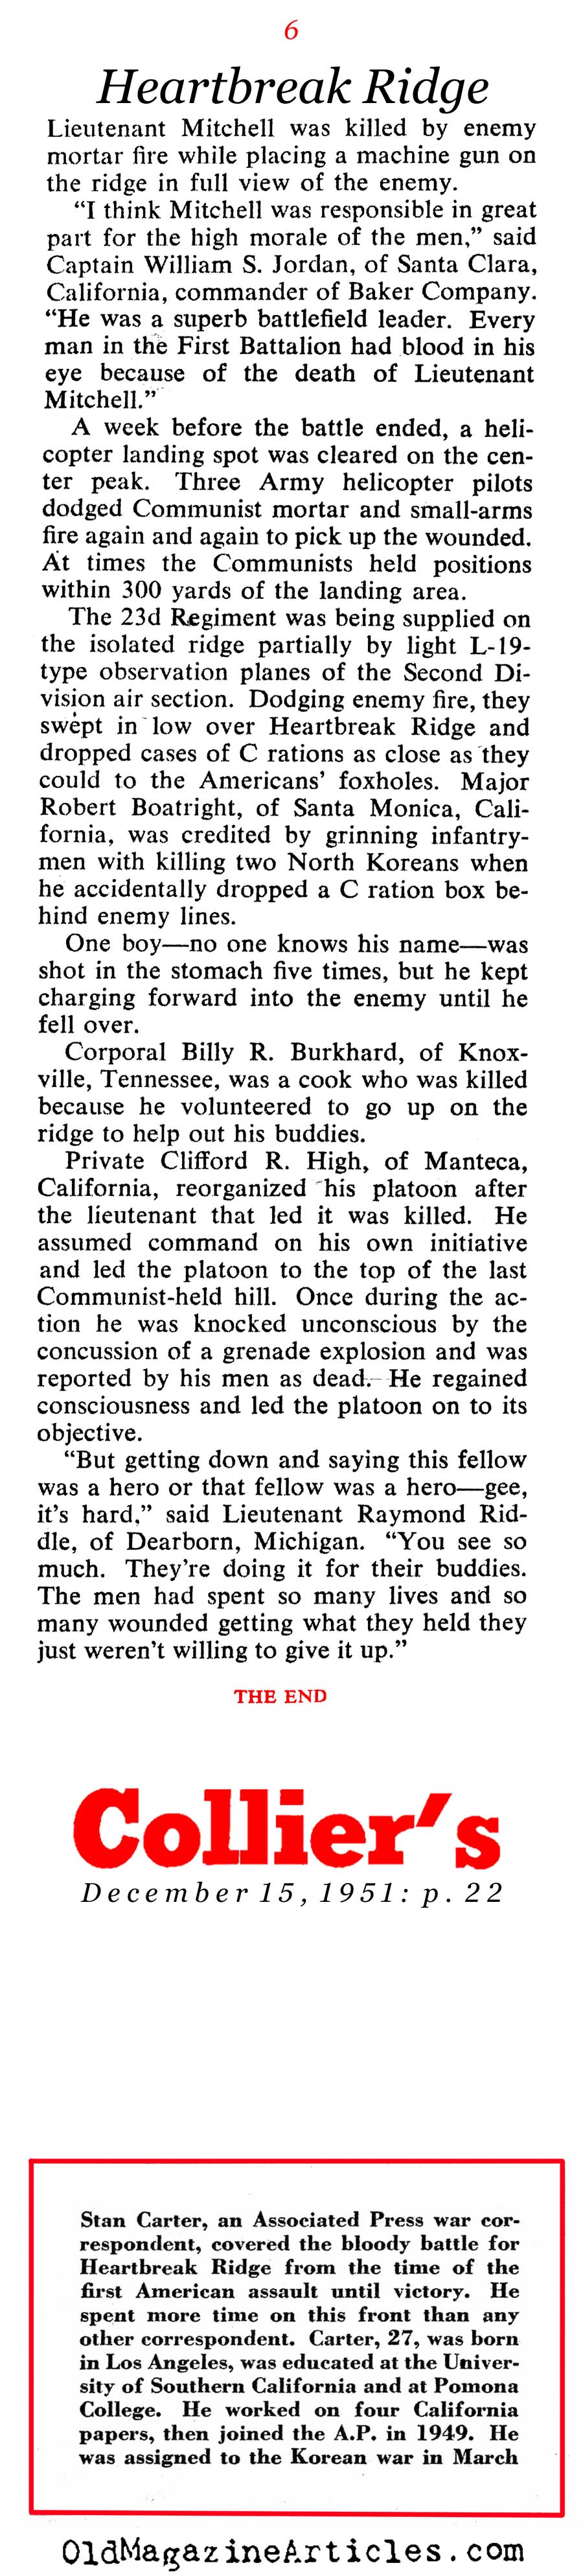 The Battle of Heartbreak Ridge (Collier's Magazine, 1951)